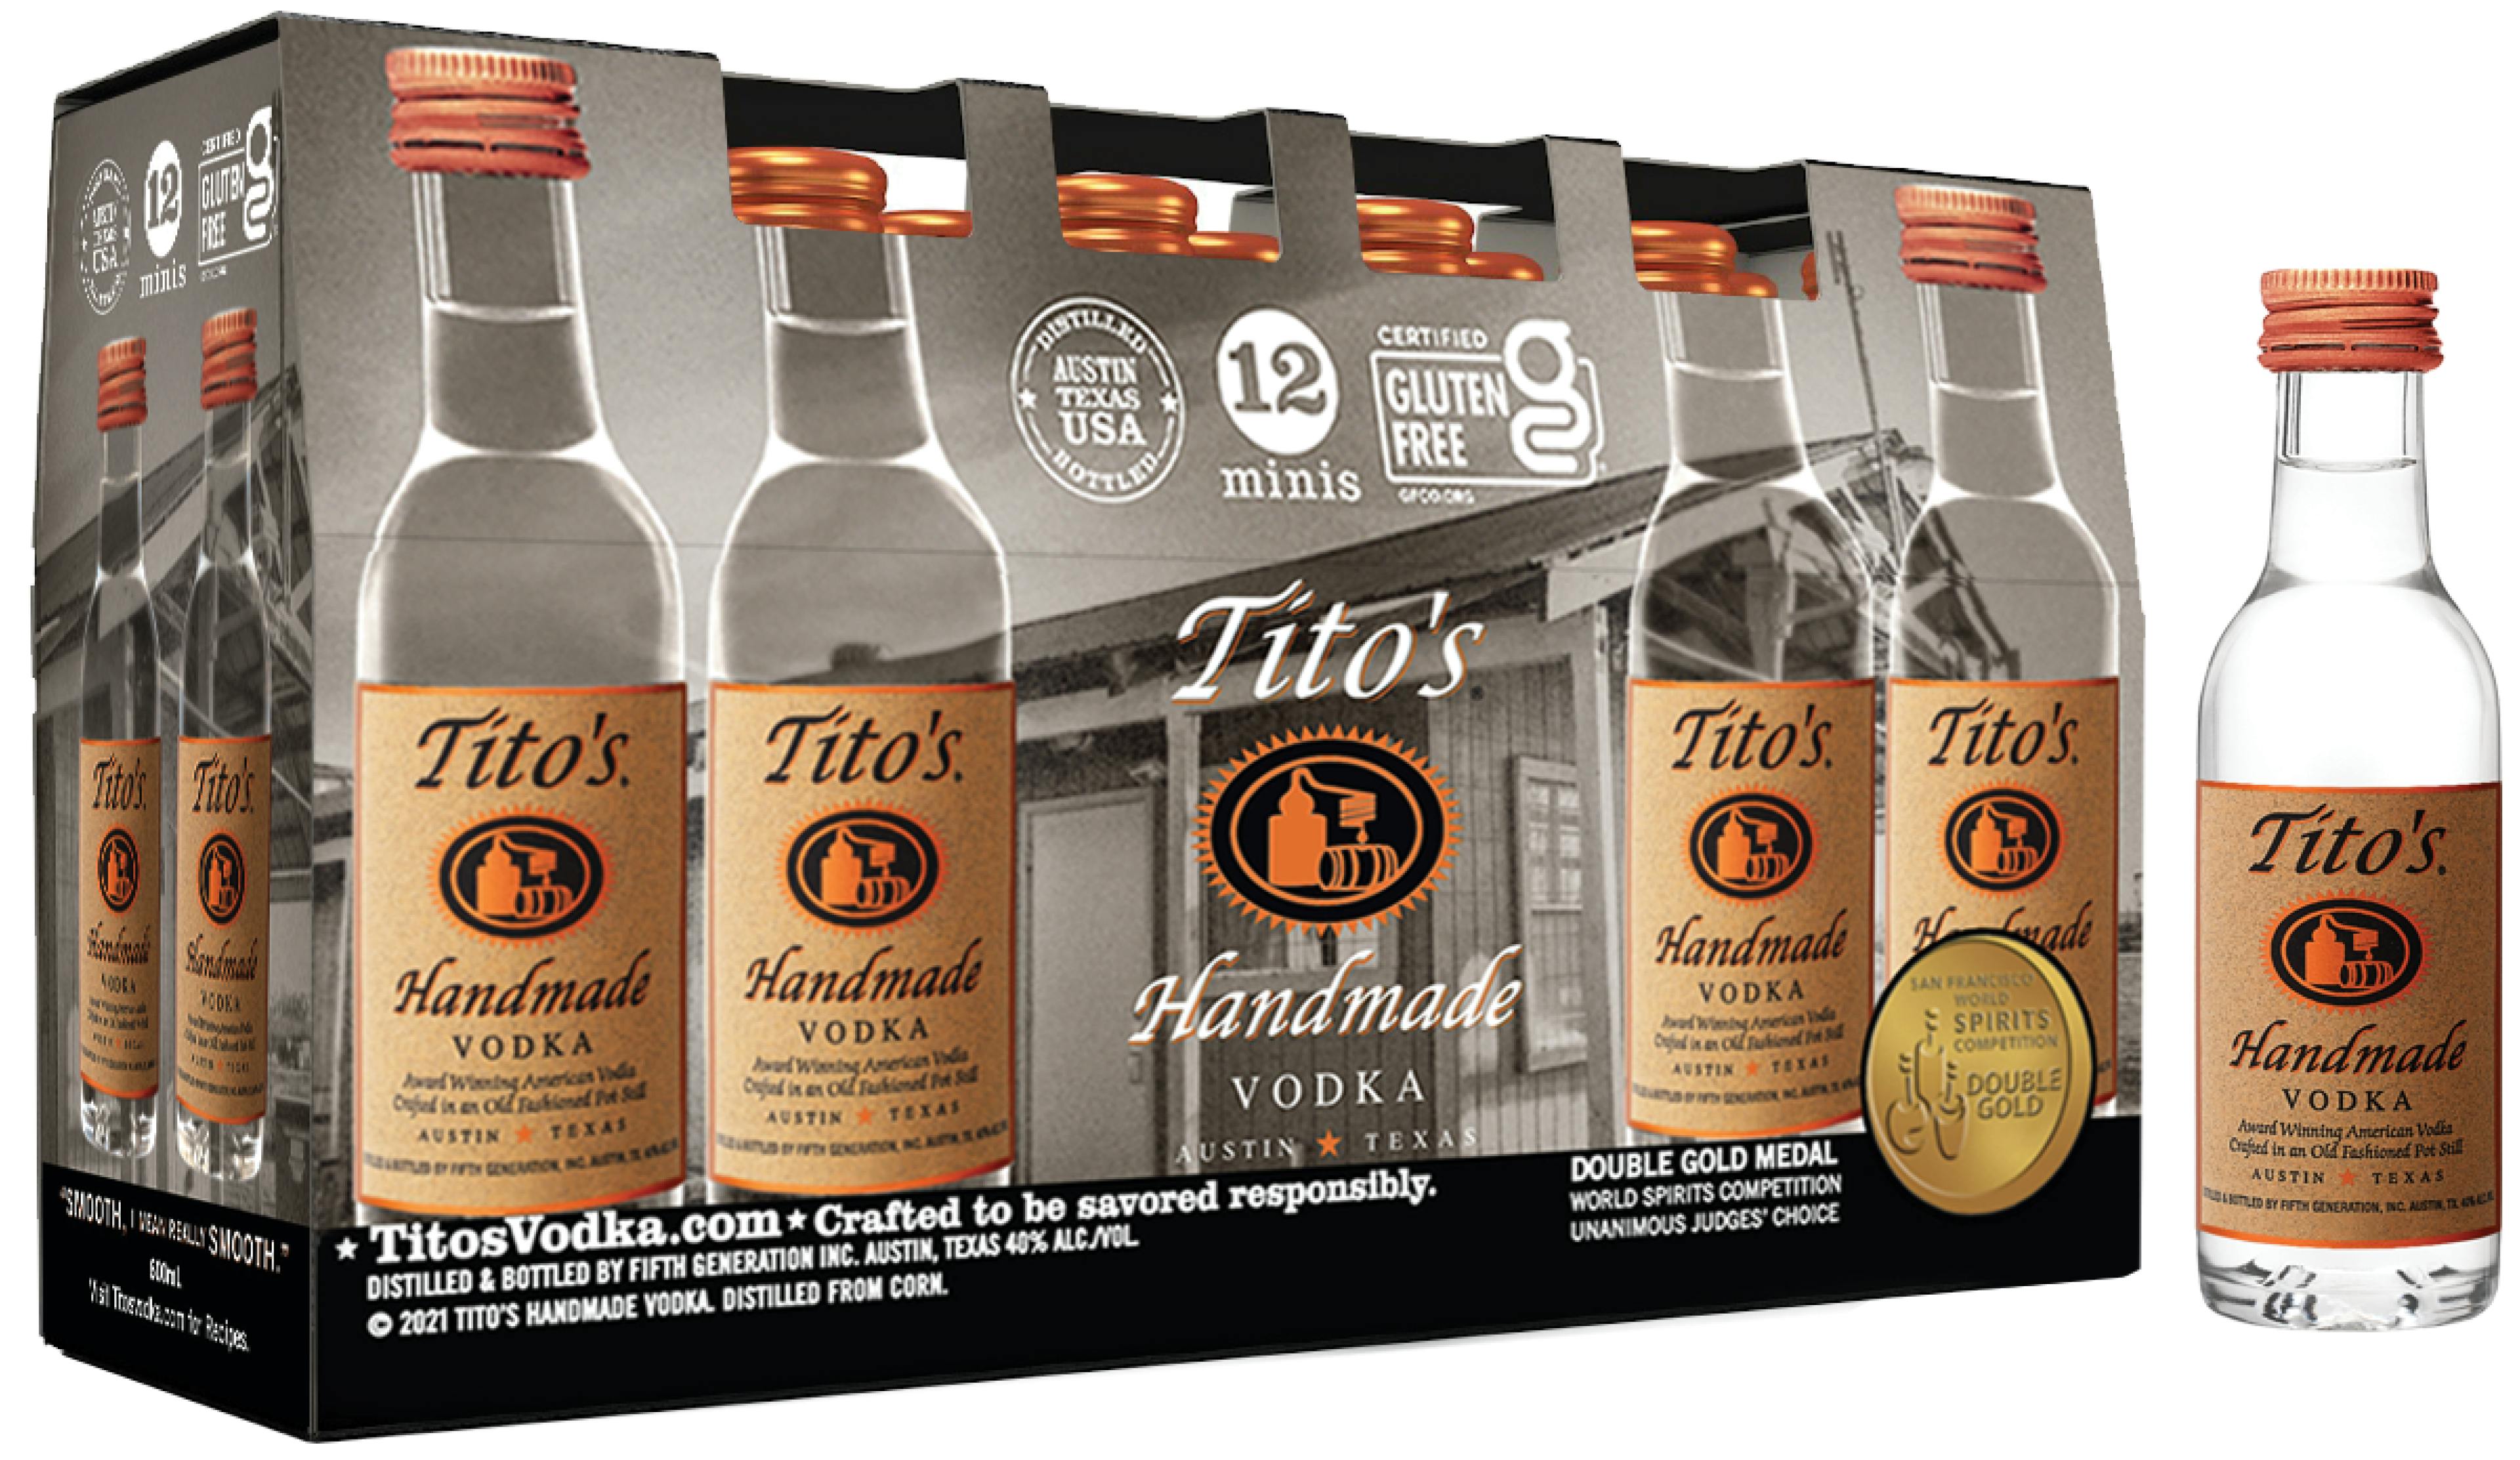 Tito's Walk-Pack – Tito's Handmade Vodka